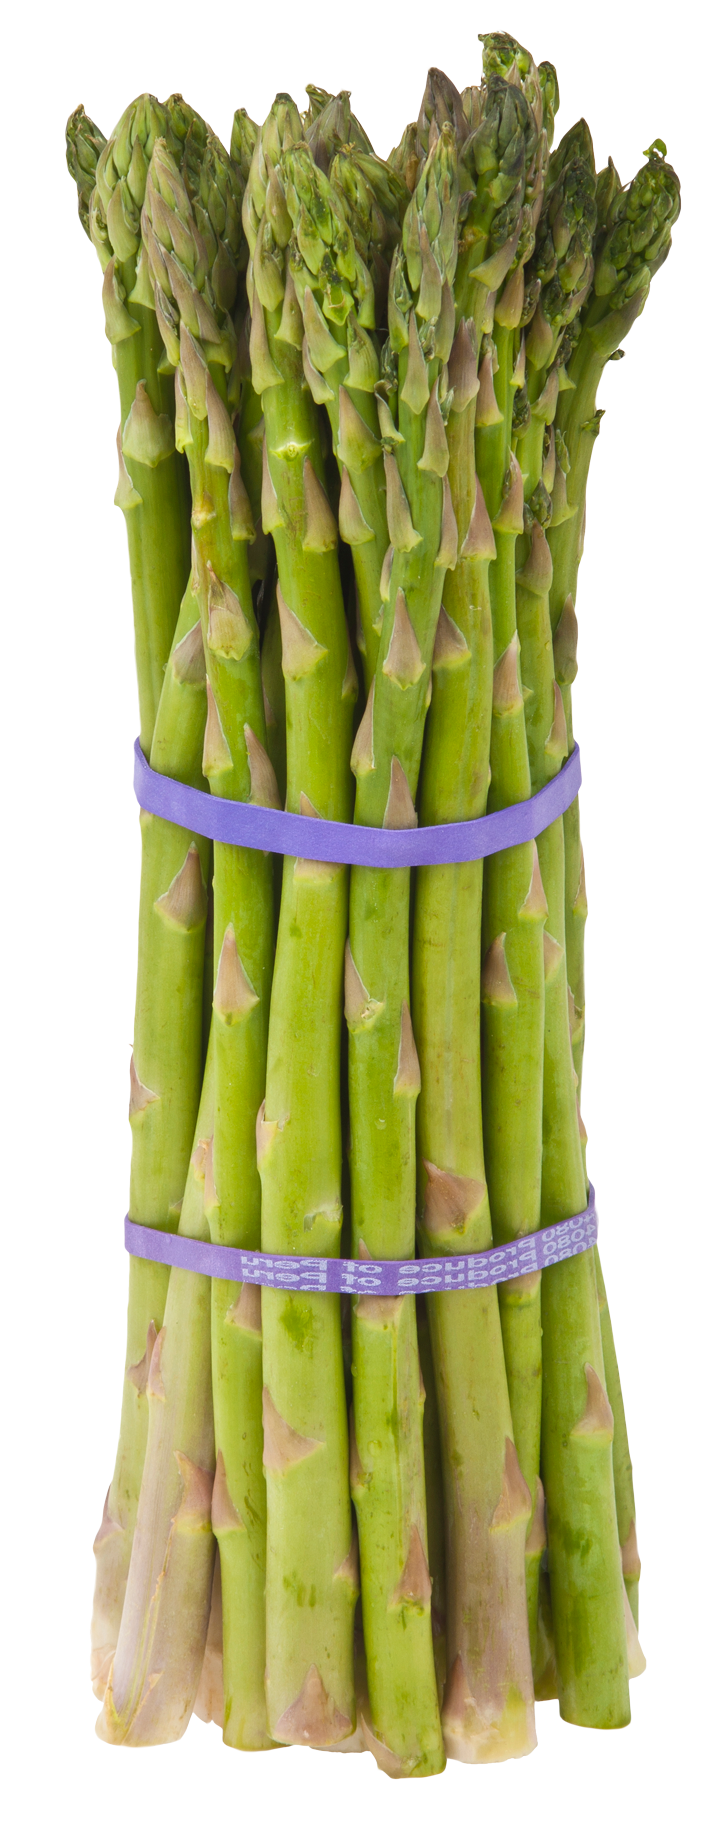 A Bundle Of Asparagus Tied Together